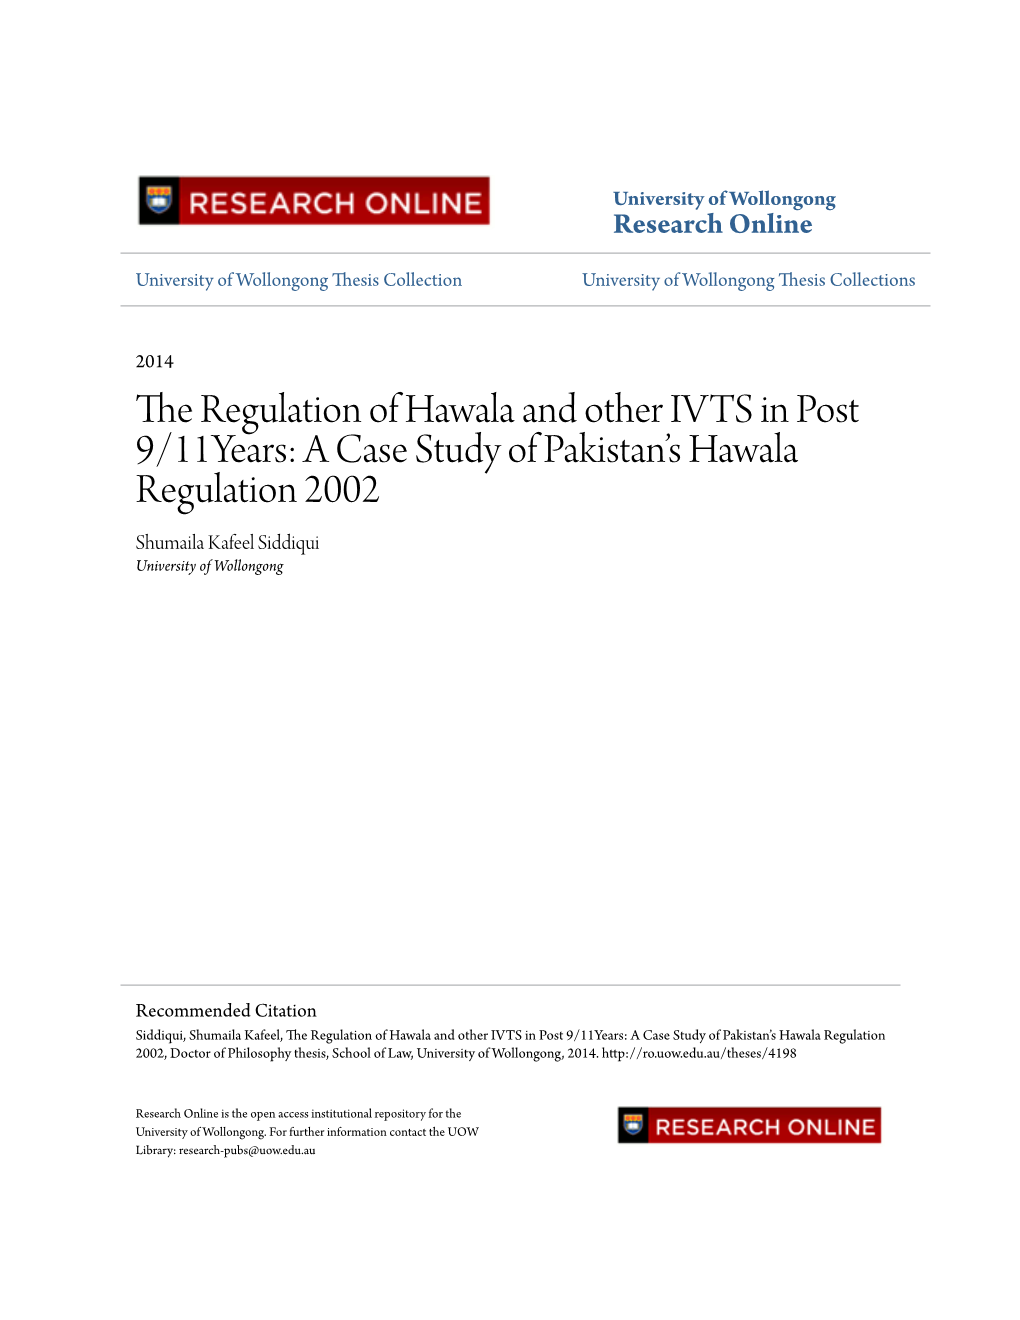 A Case Study of Pakistan's Hawala Regulation 2002